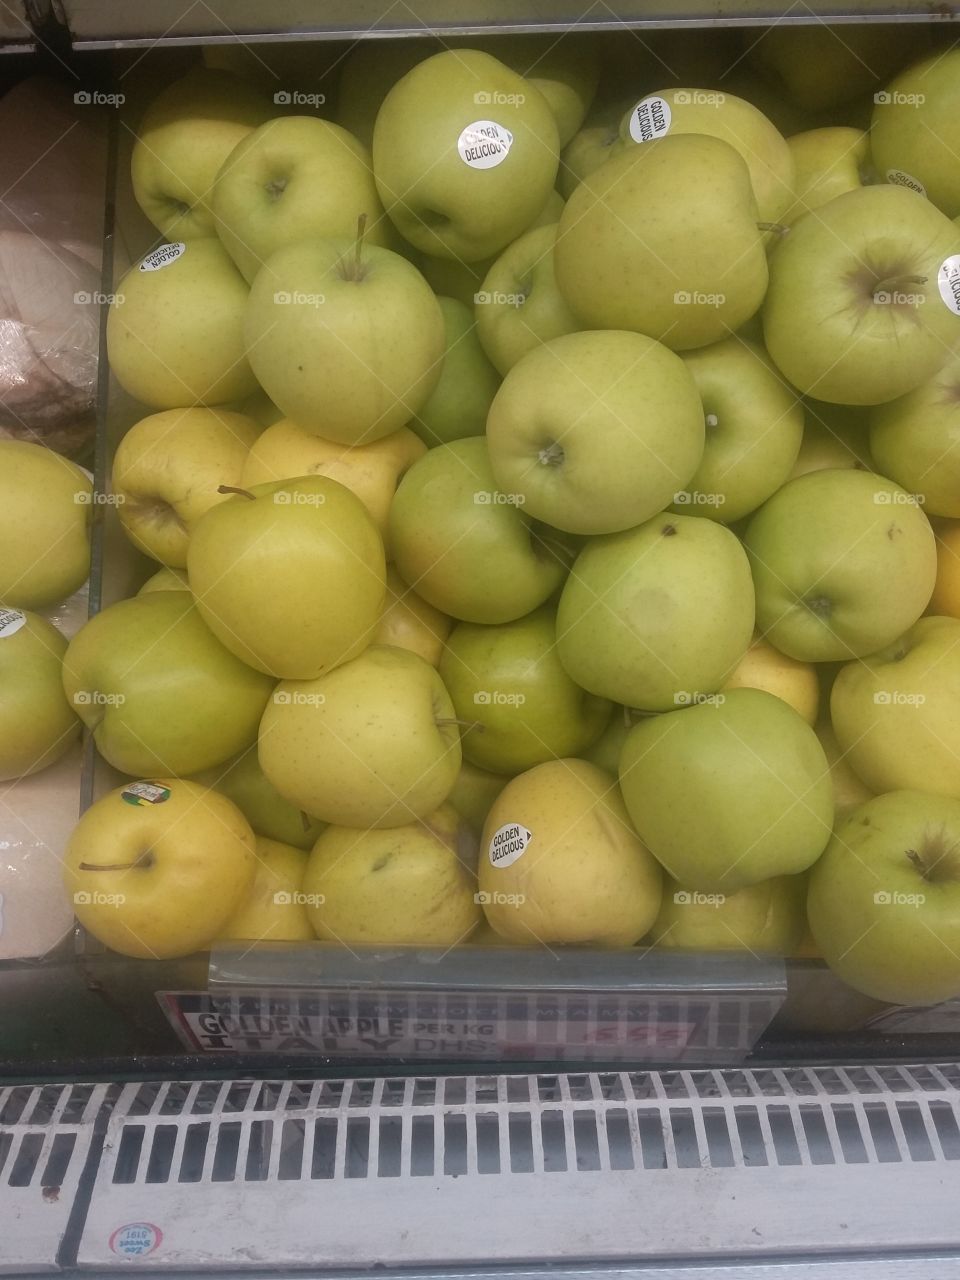 apple frut sweet green yellow